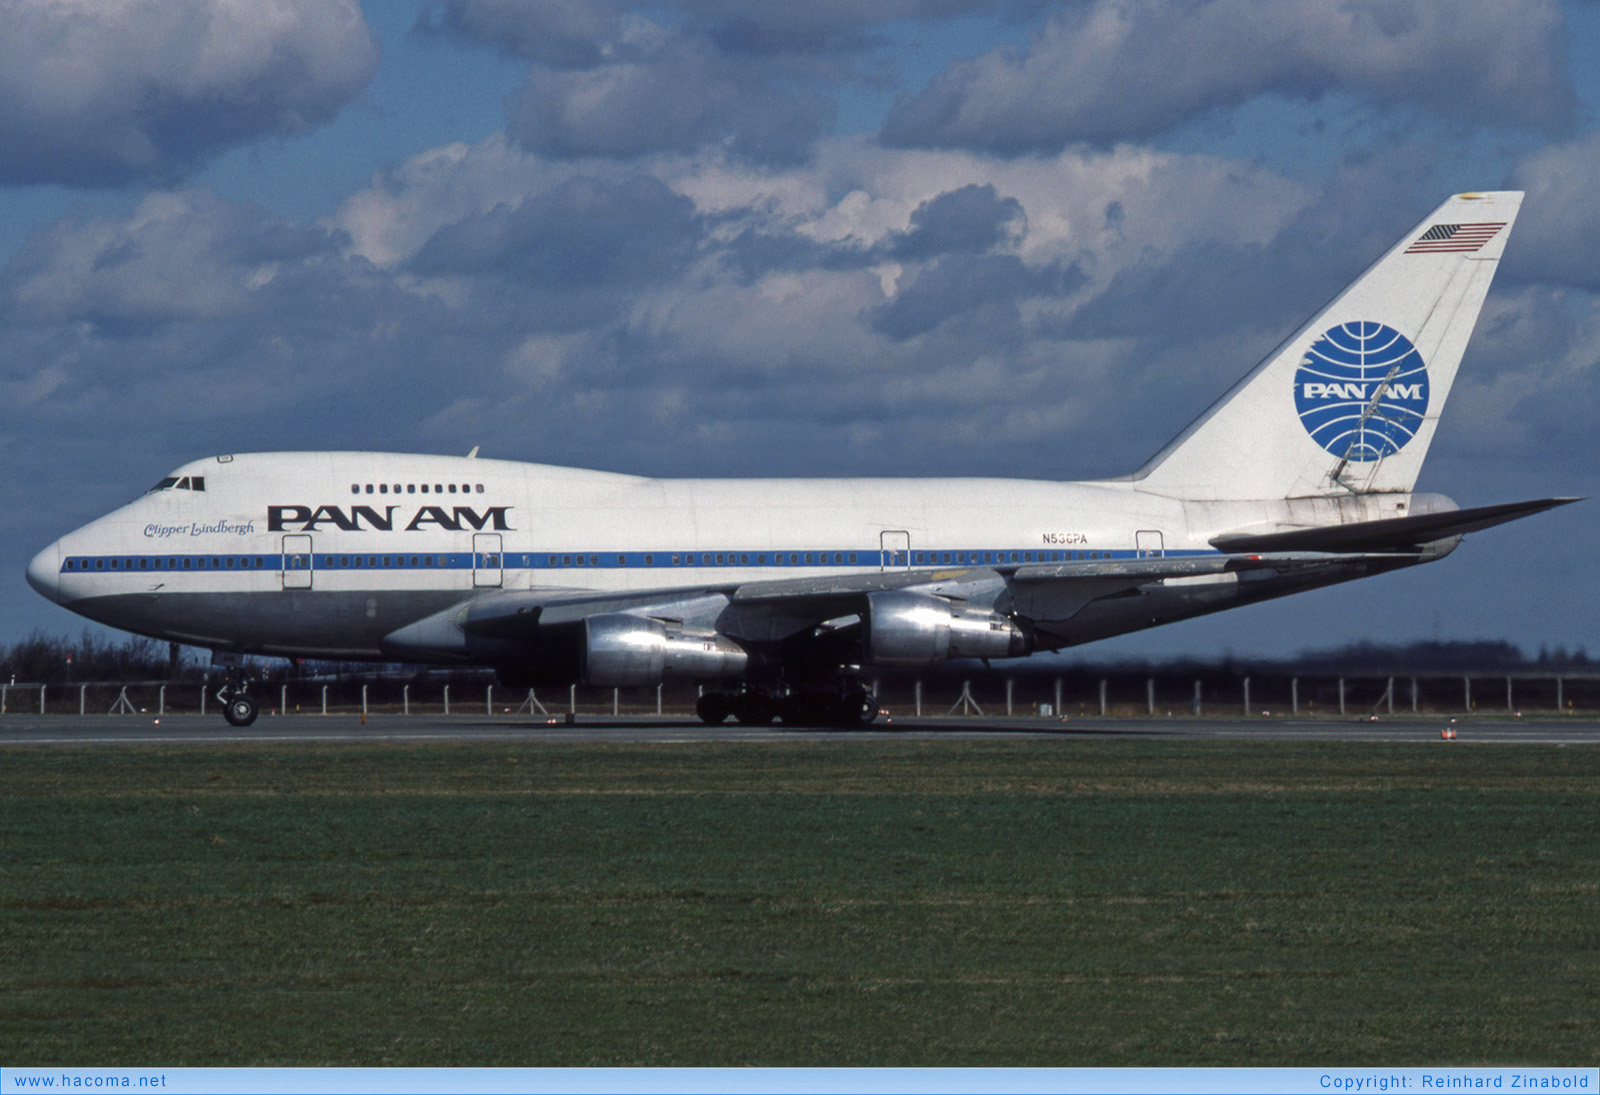 Foto von N536PA - Pan Am Clipper Lindbergh - Flughafen München-Riem